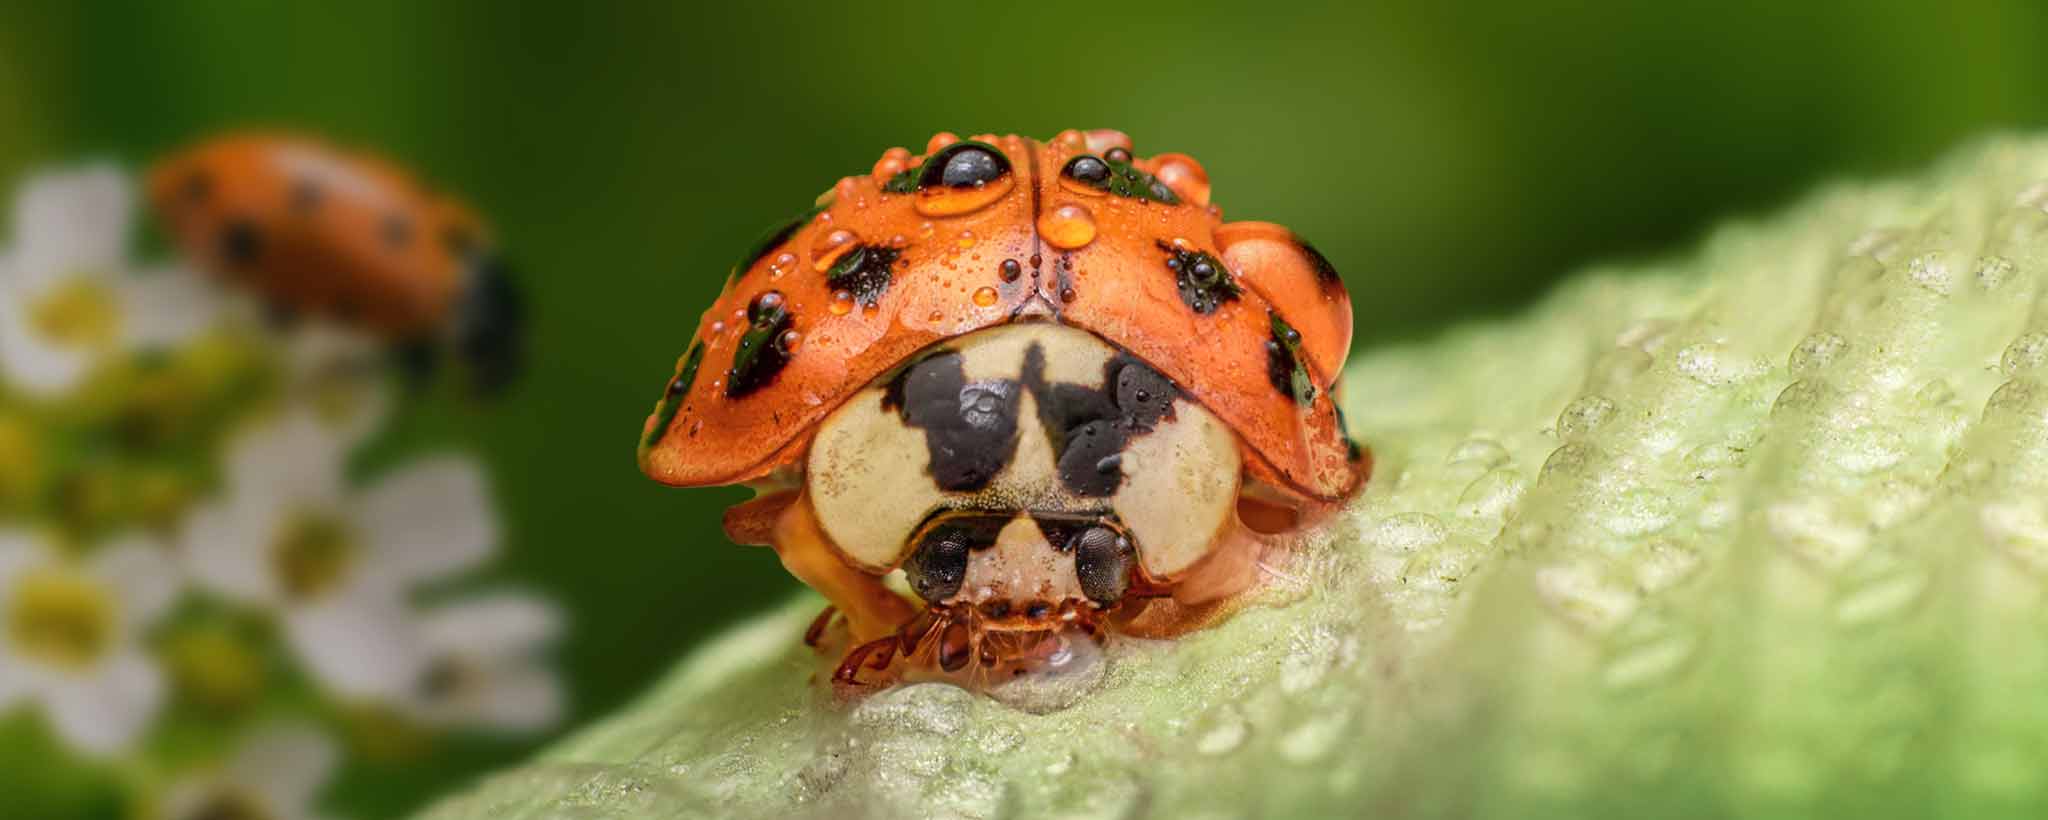 'Orange ladybug on green leaf'